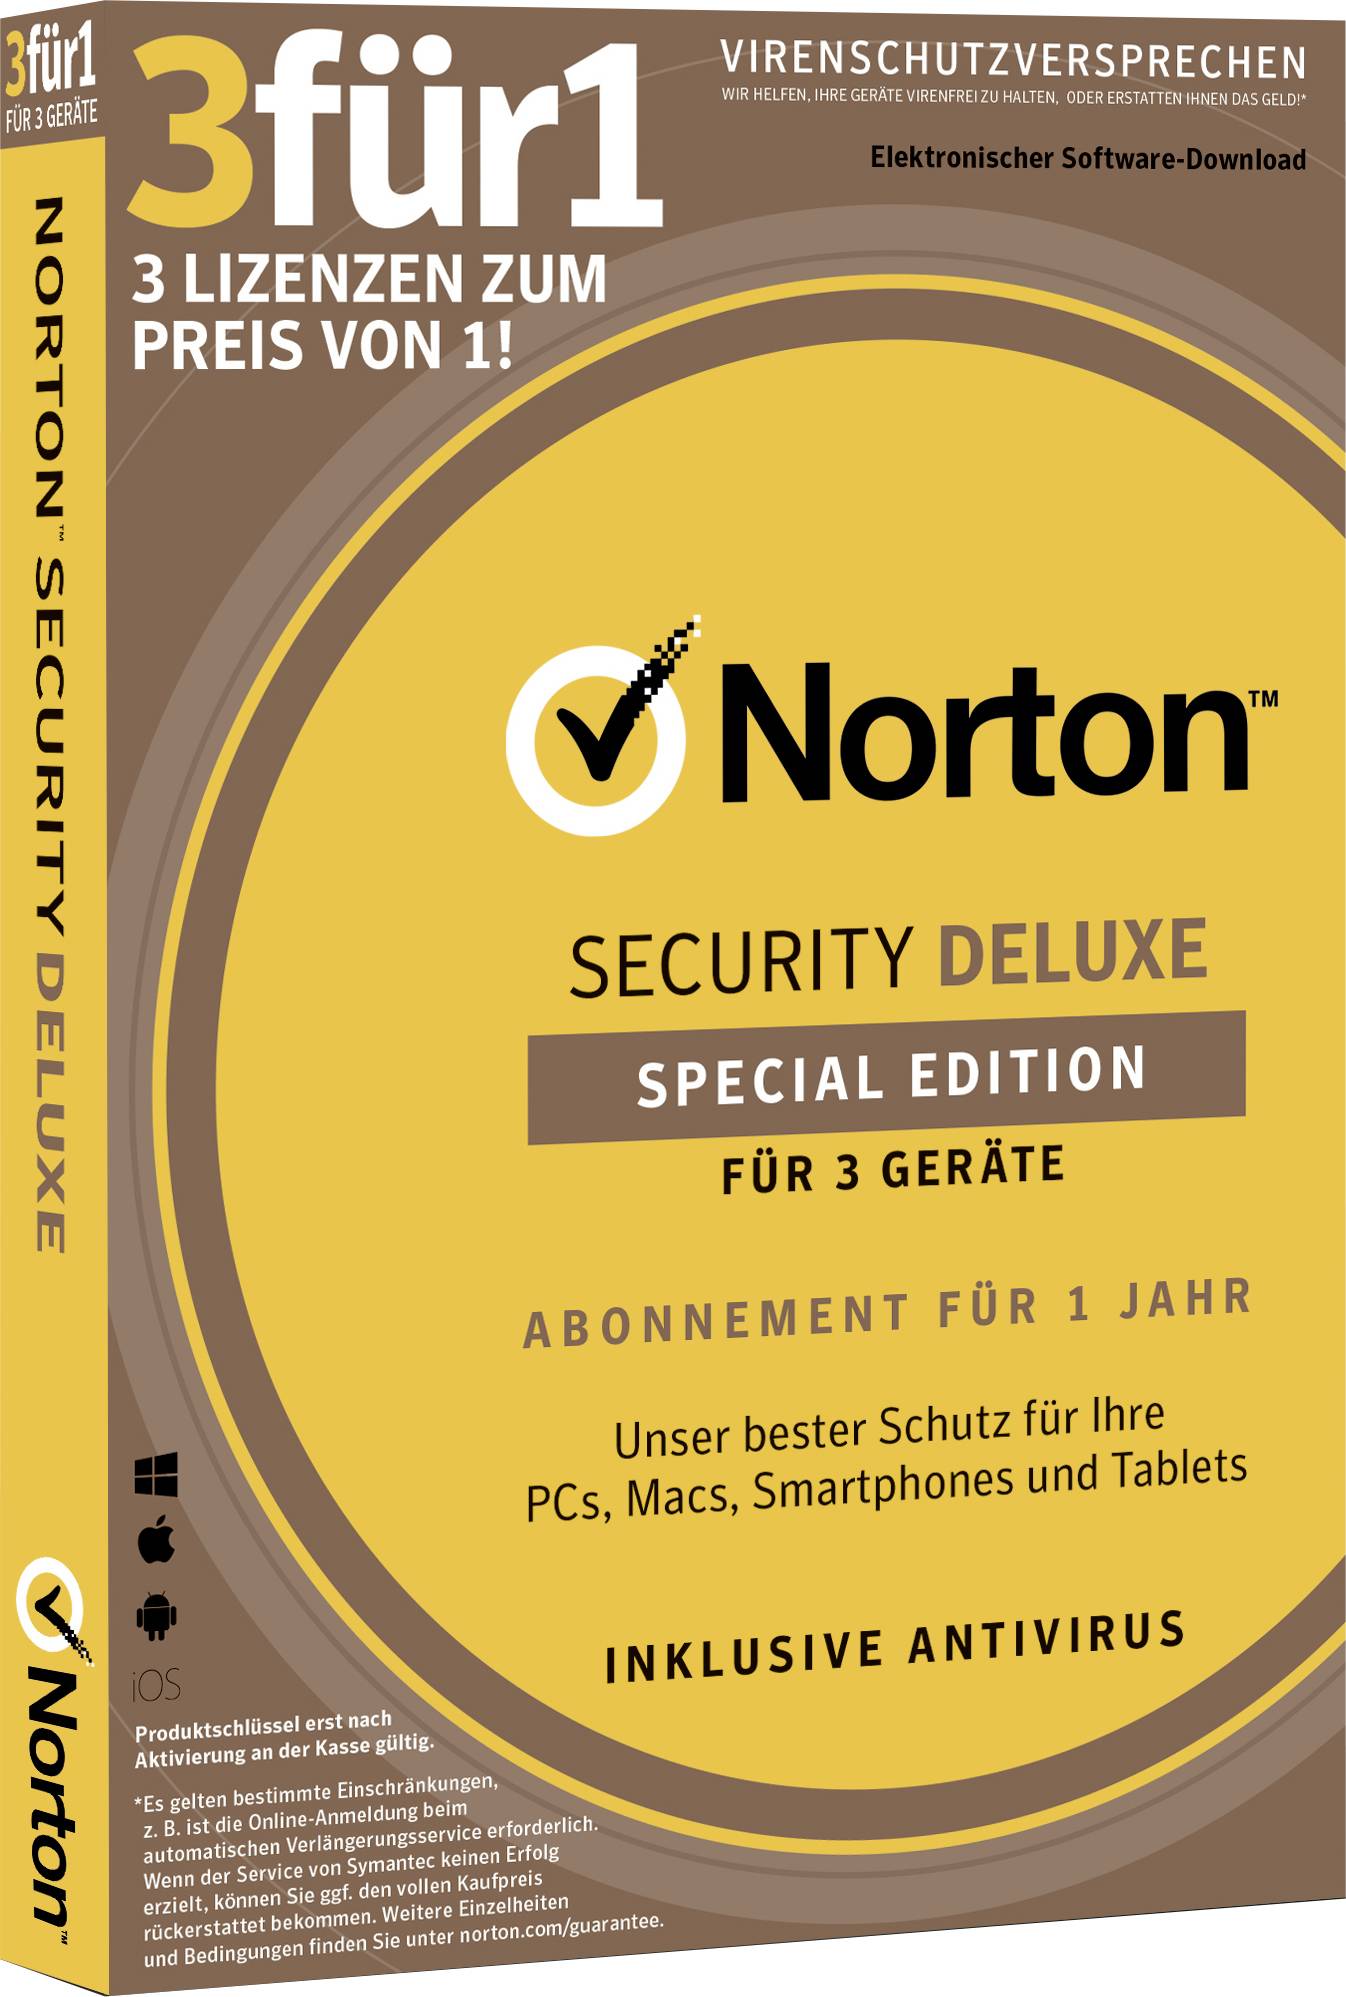 norton life lock reviews